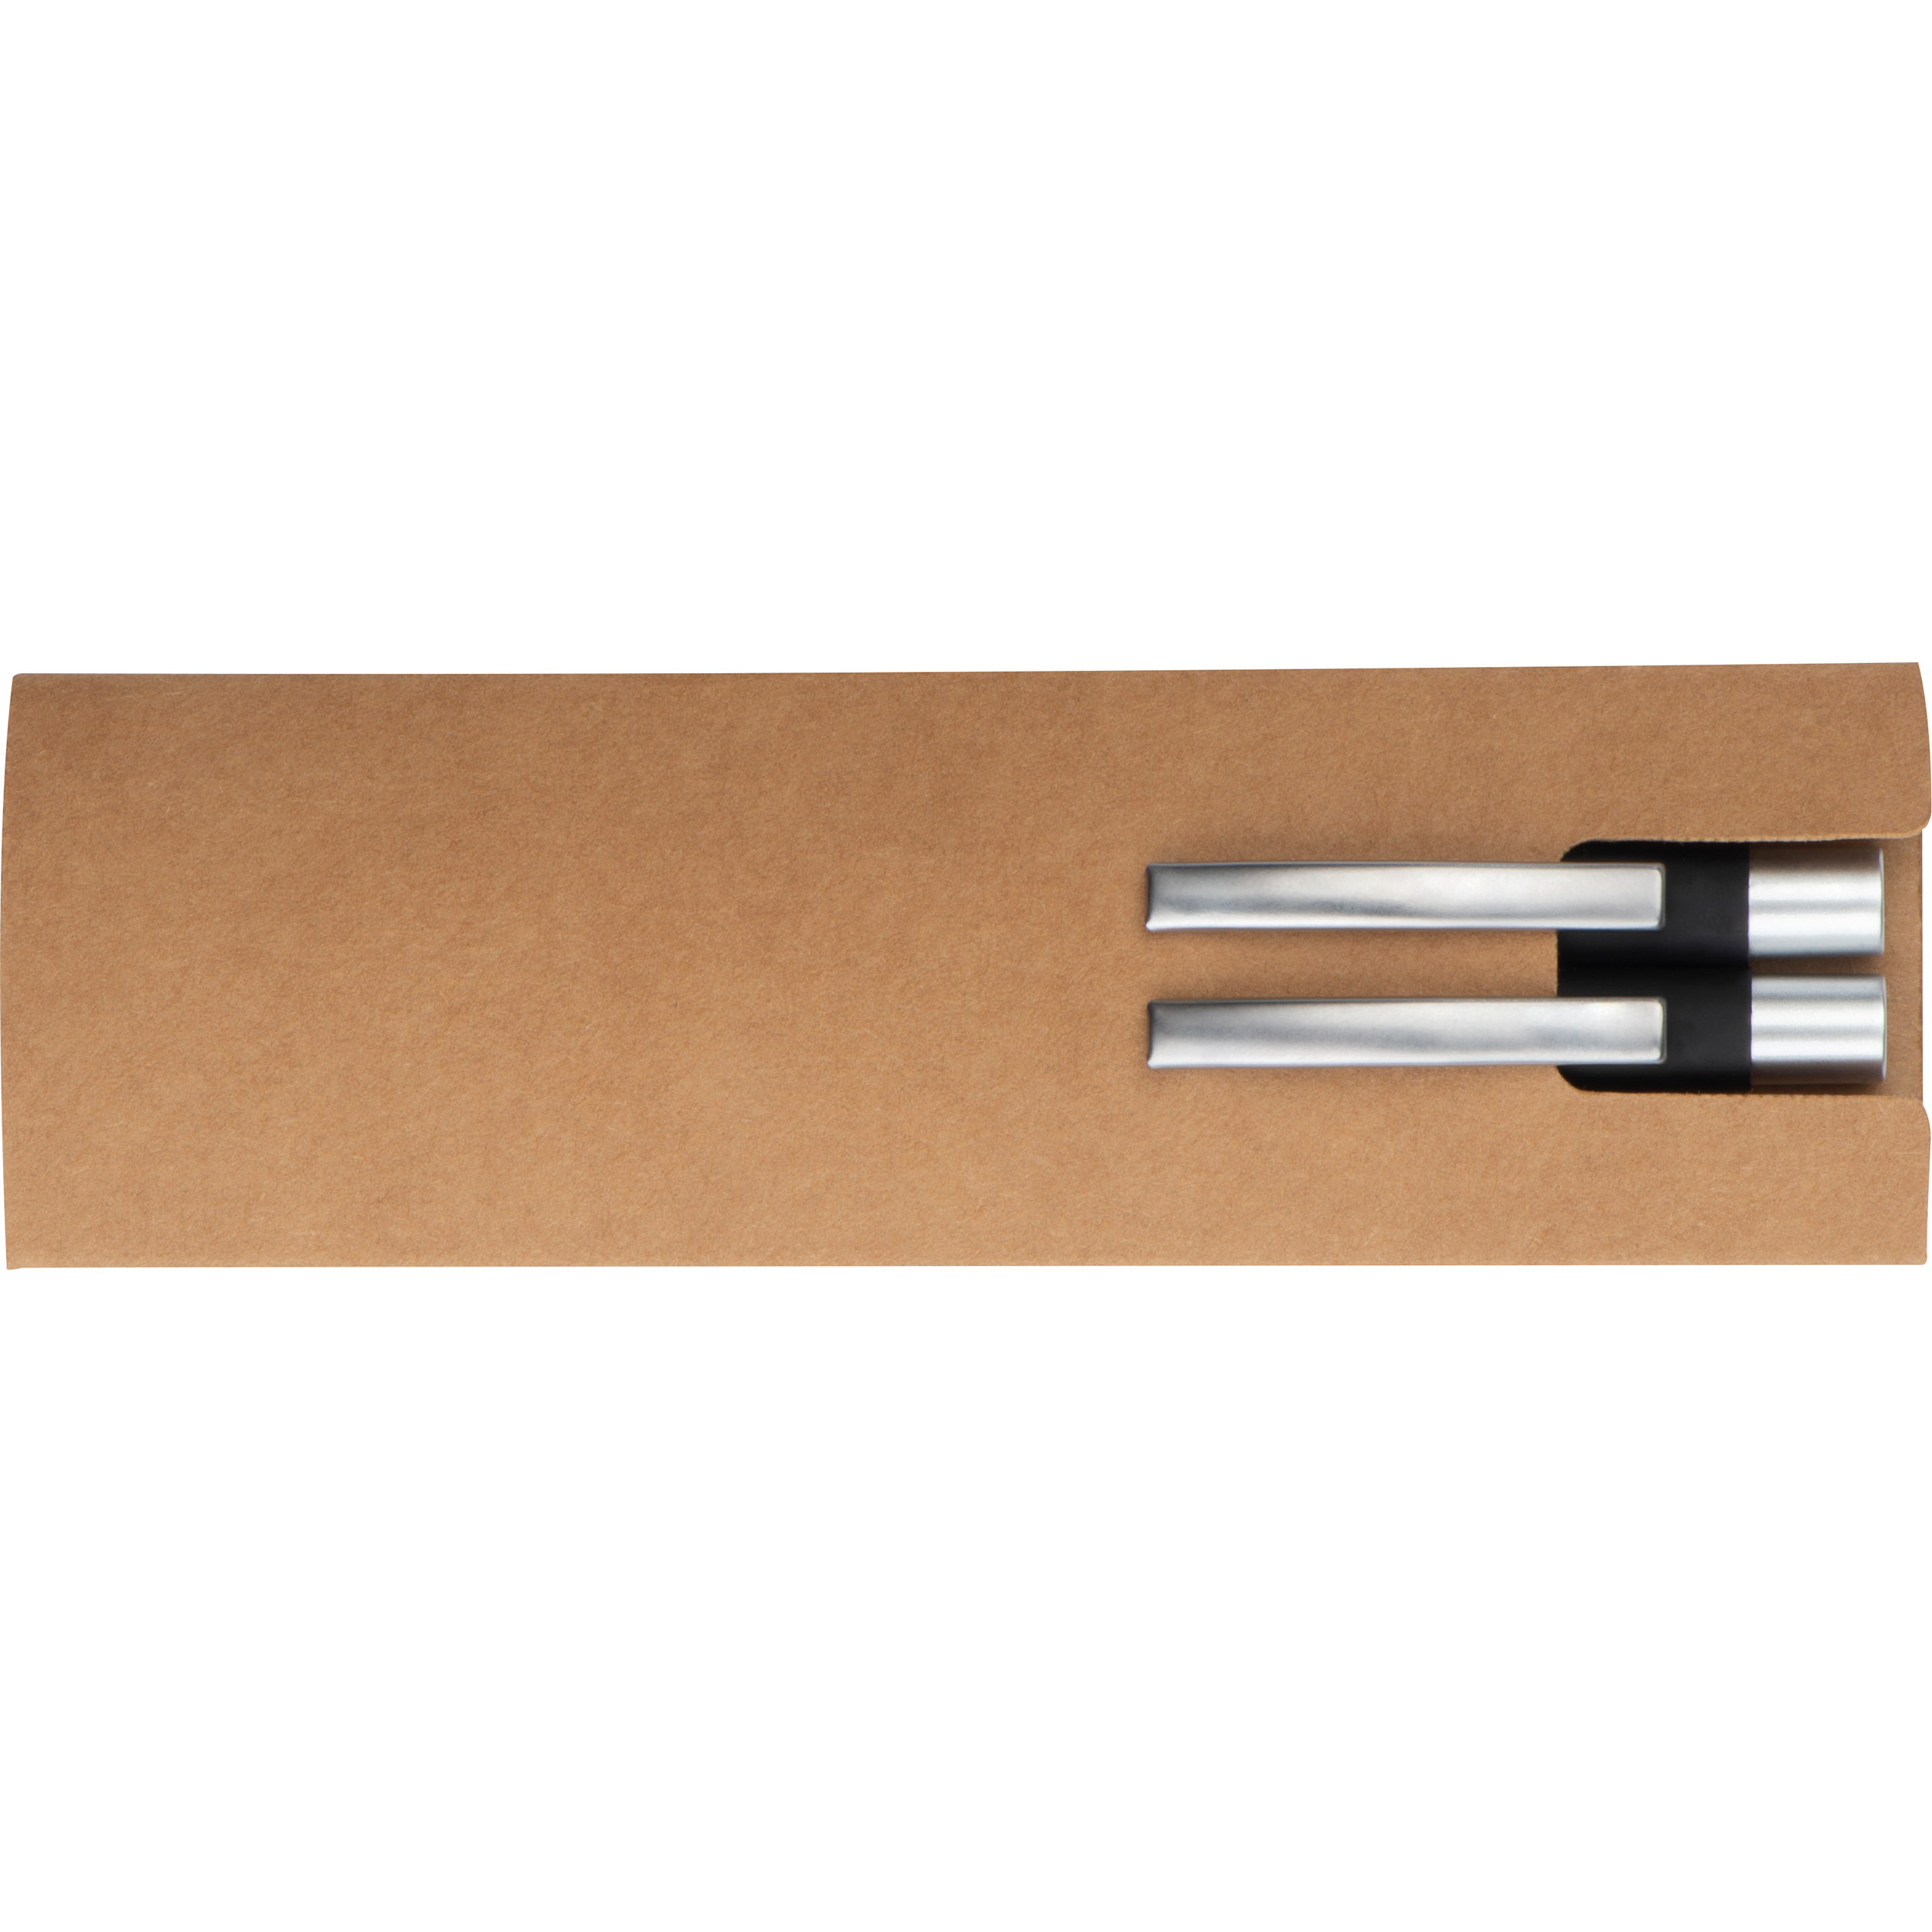 Set de escritura de aluminio con bolígrafo y lápiz con zona de agarre de bambú